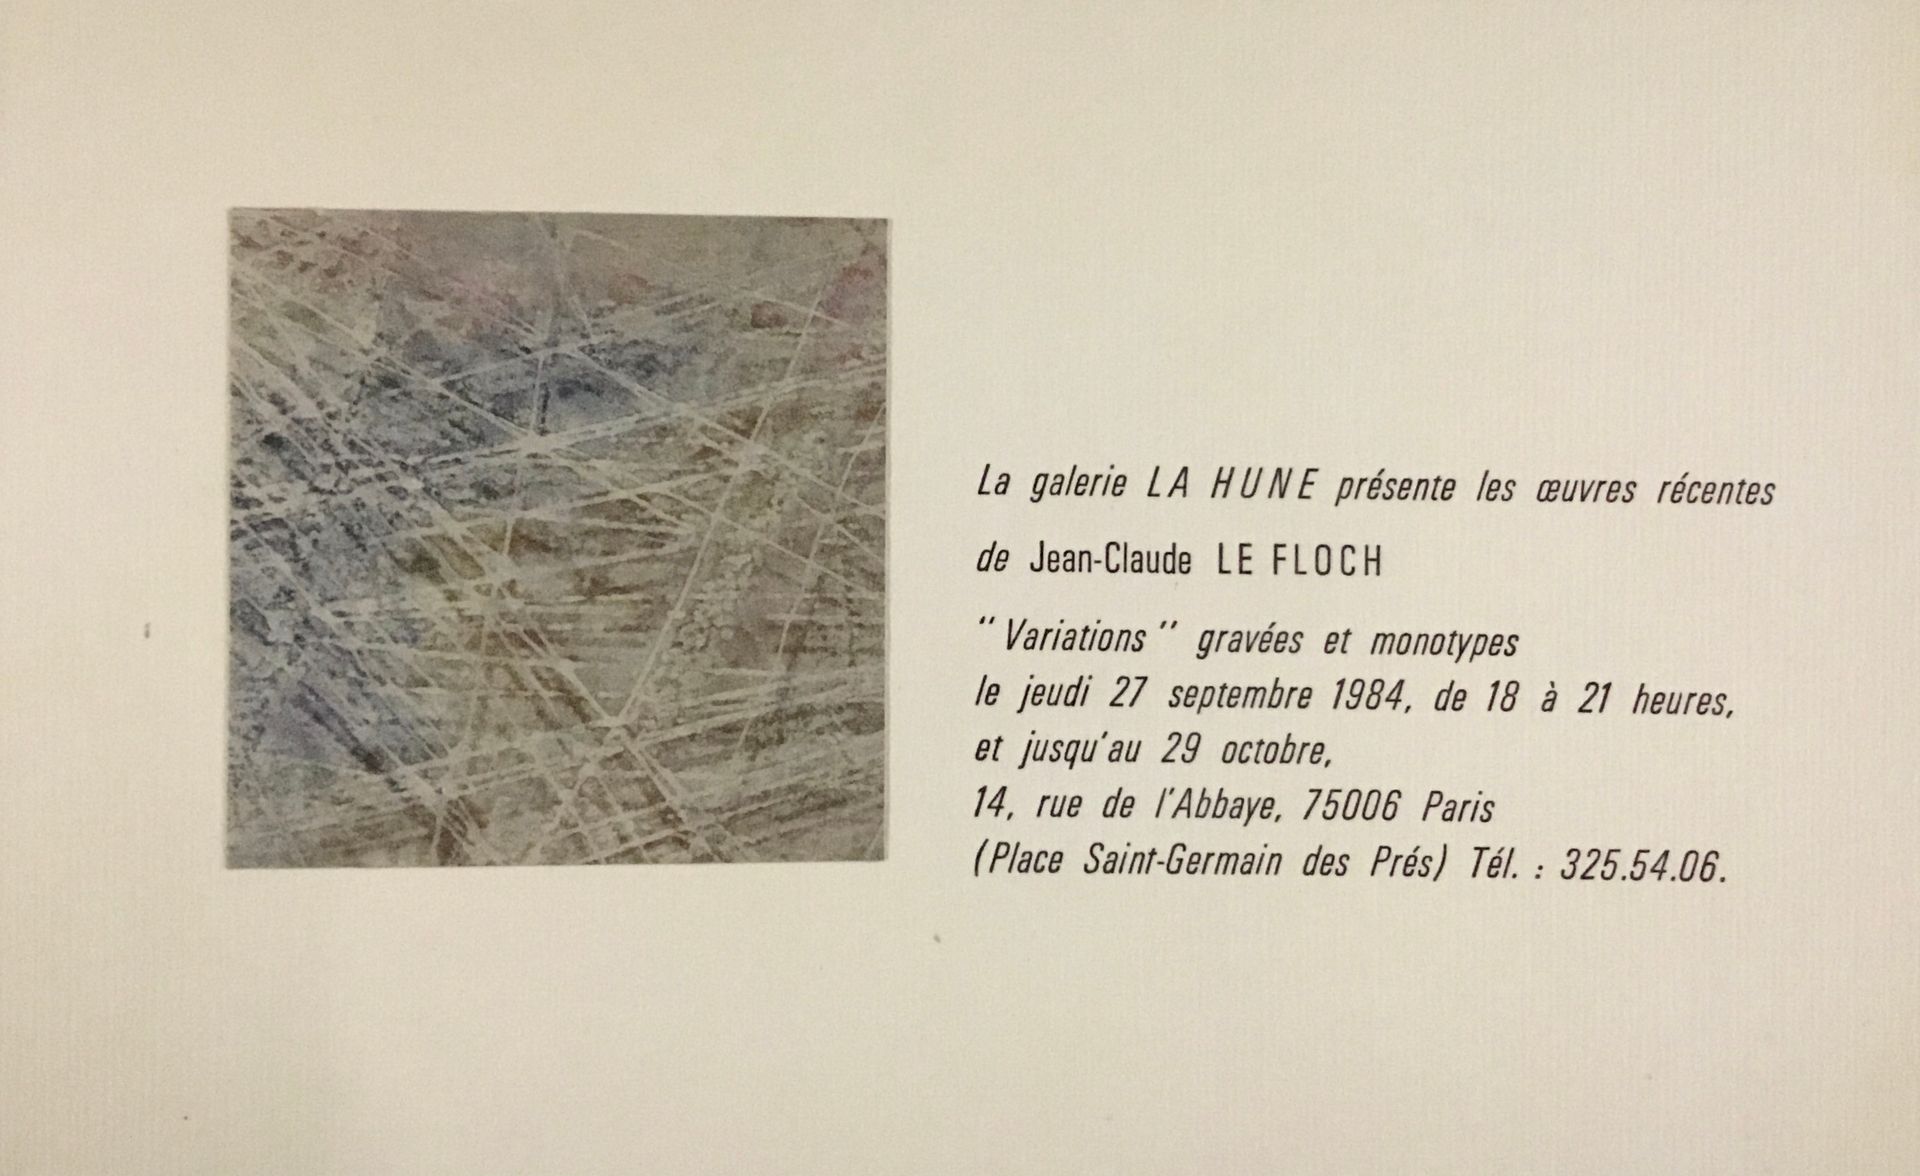 Null 勒-弗洛赫-让-克劳德

1984年，为拉胡内画廊的邀请卡制作的纸上单版画。

格式 13 x 21 cm